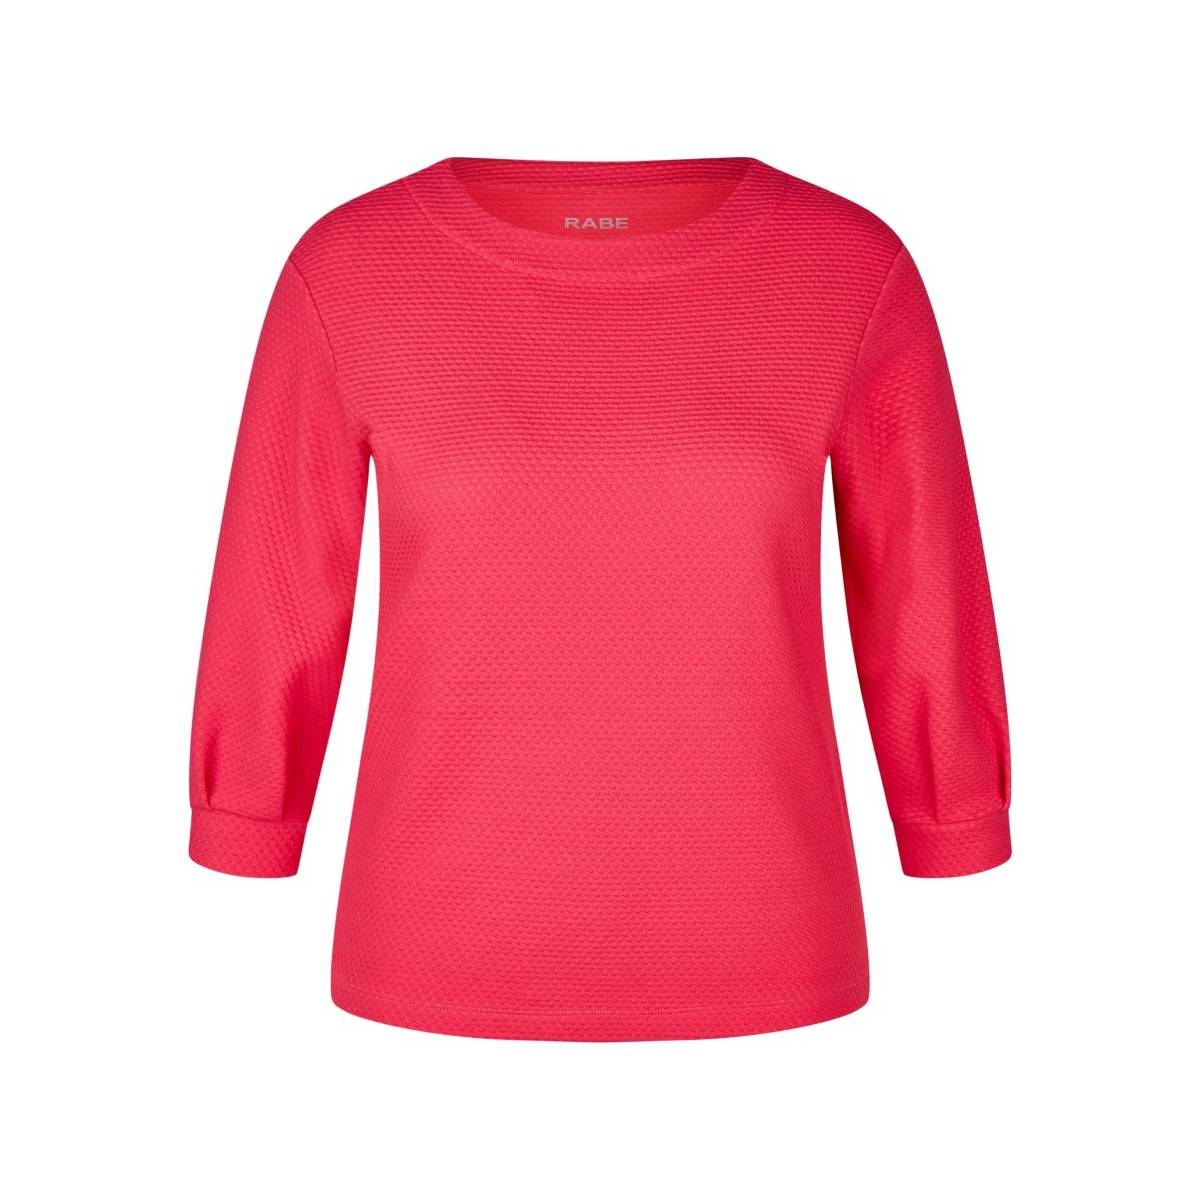 RABE  t shirts donker roze -  model 52-113301 - Dameskleding t shirts roze